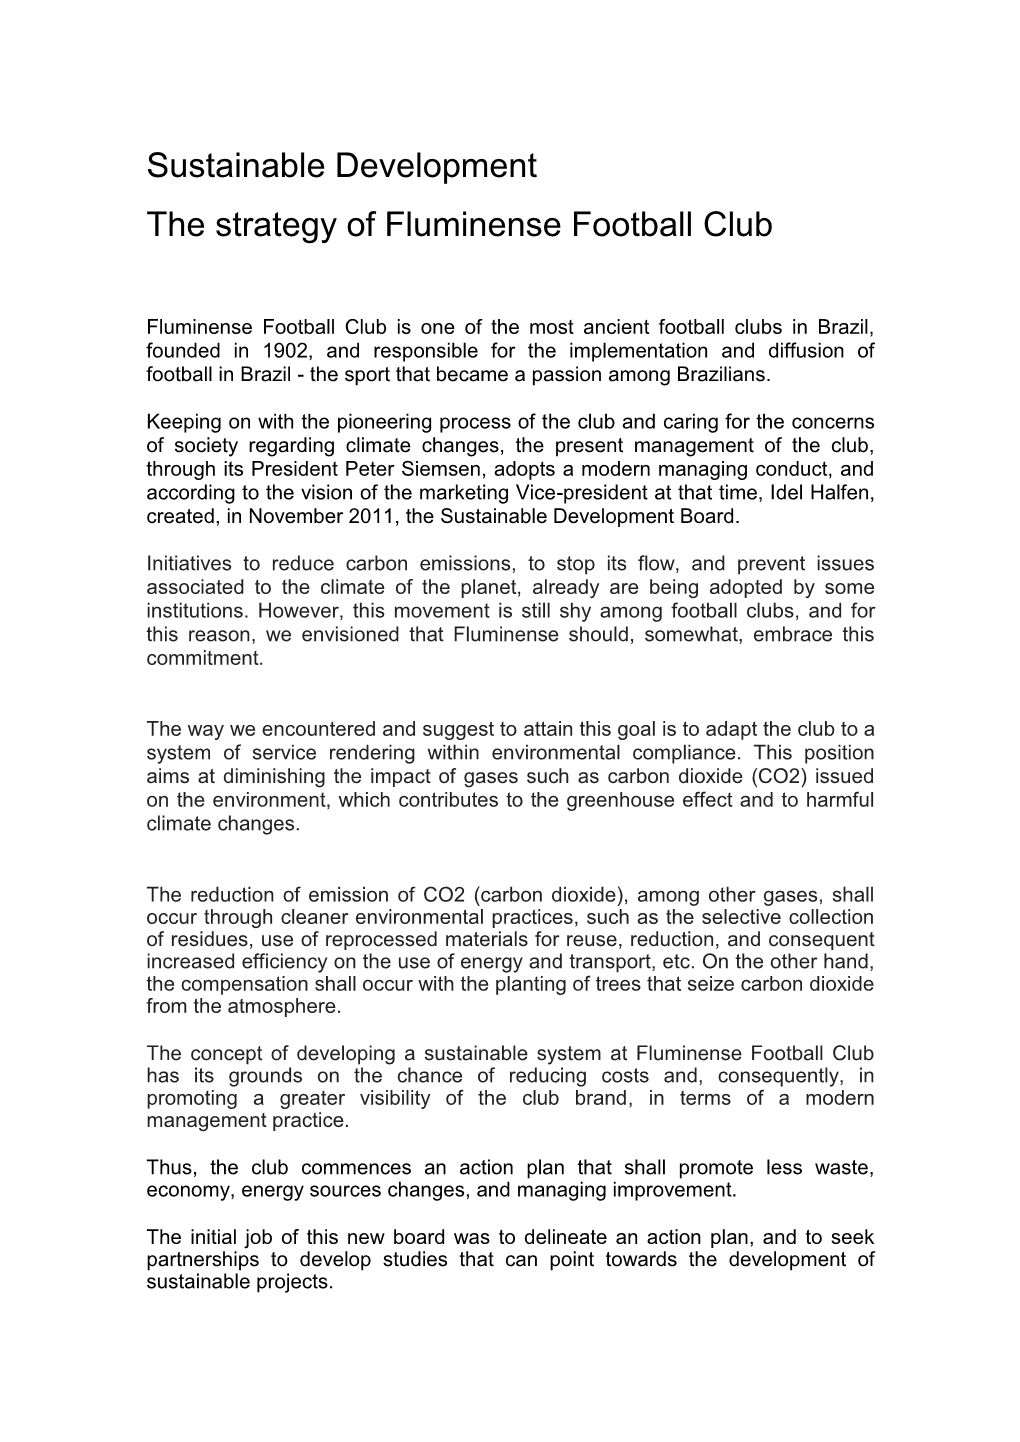 Sustainable Development the Strategy of Fluminense Football Club